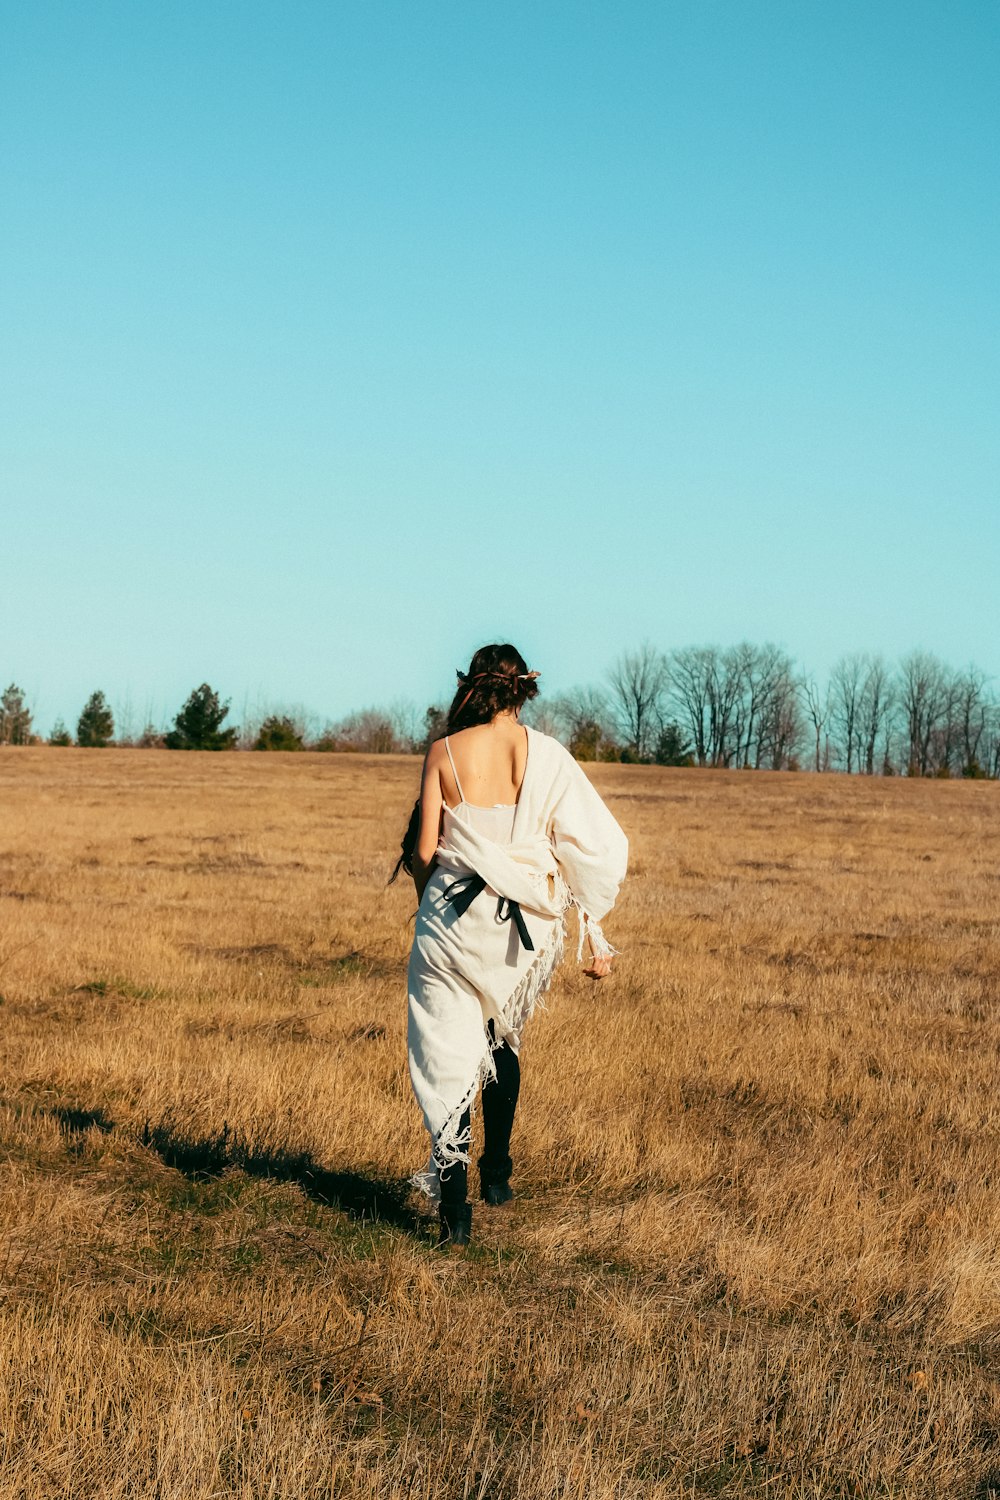 a woman walking through a dry grass field